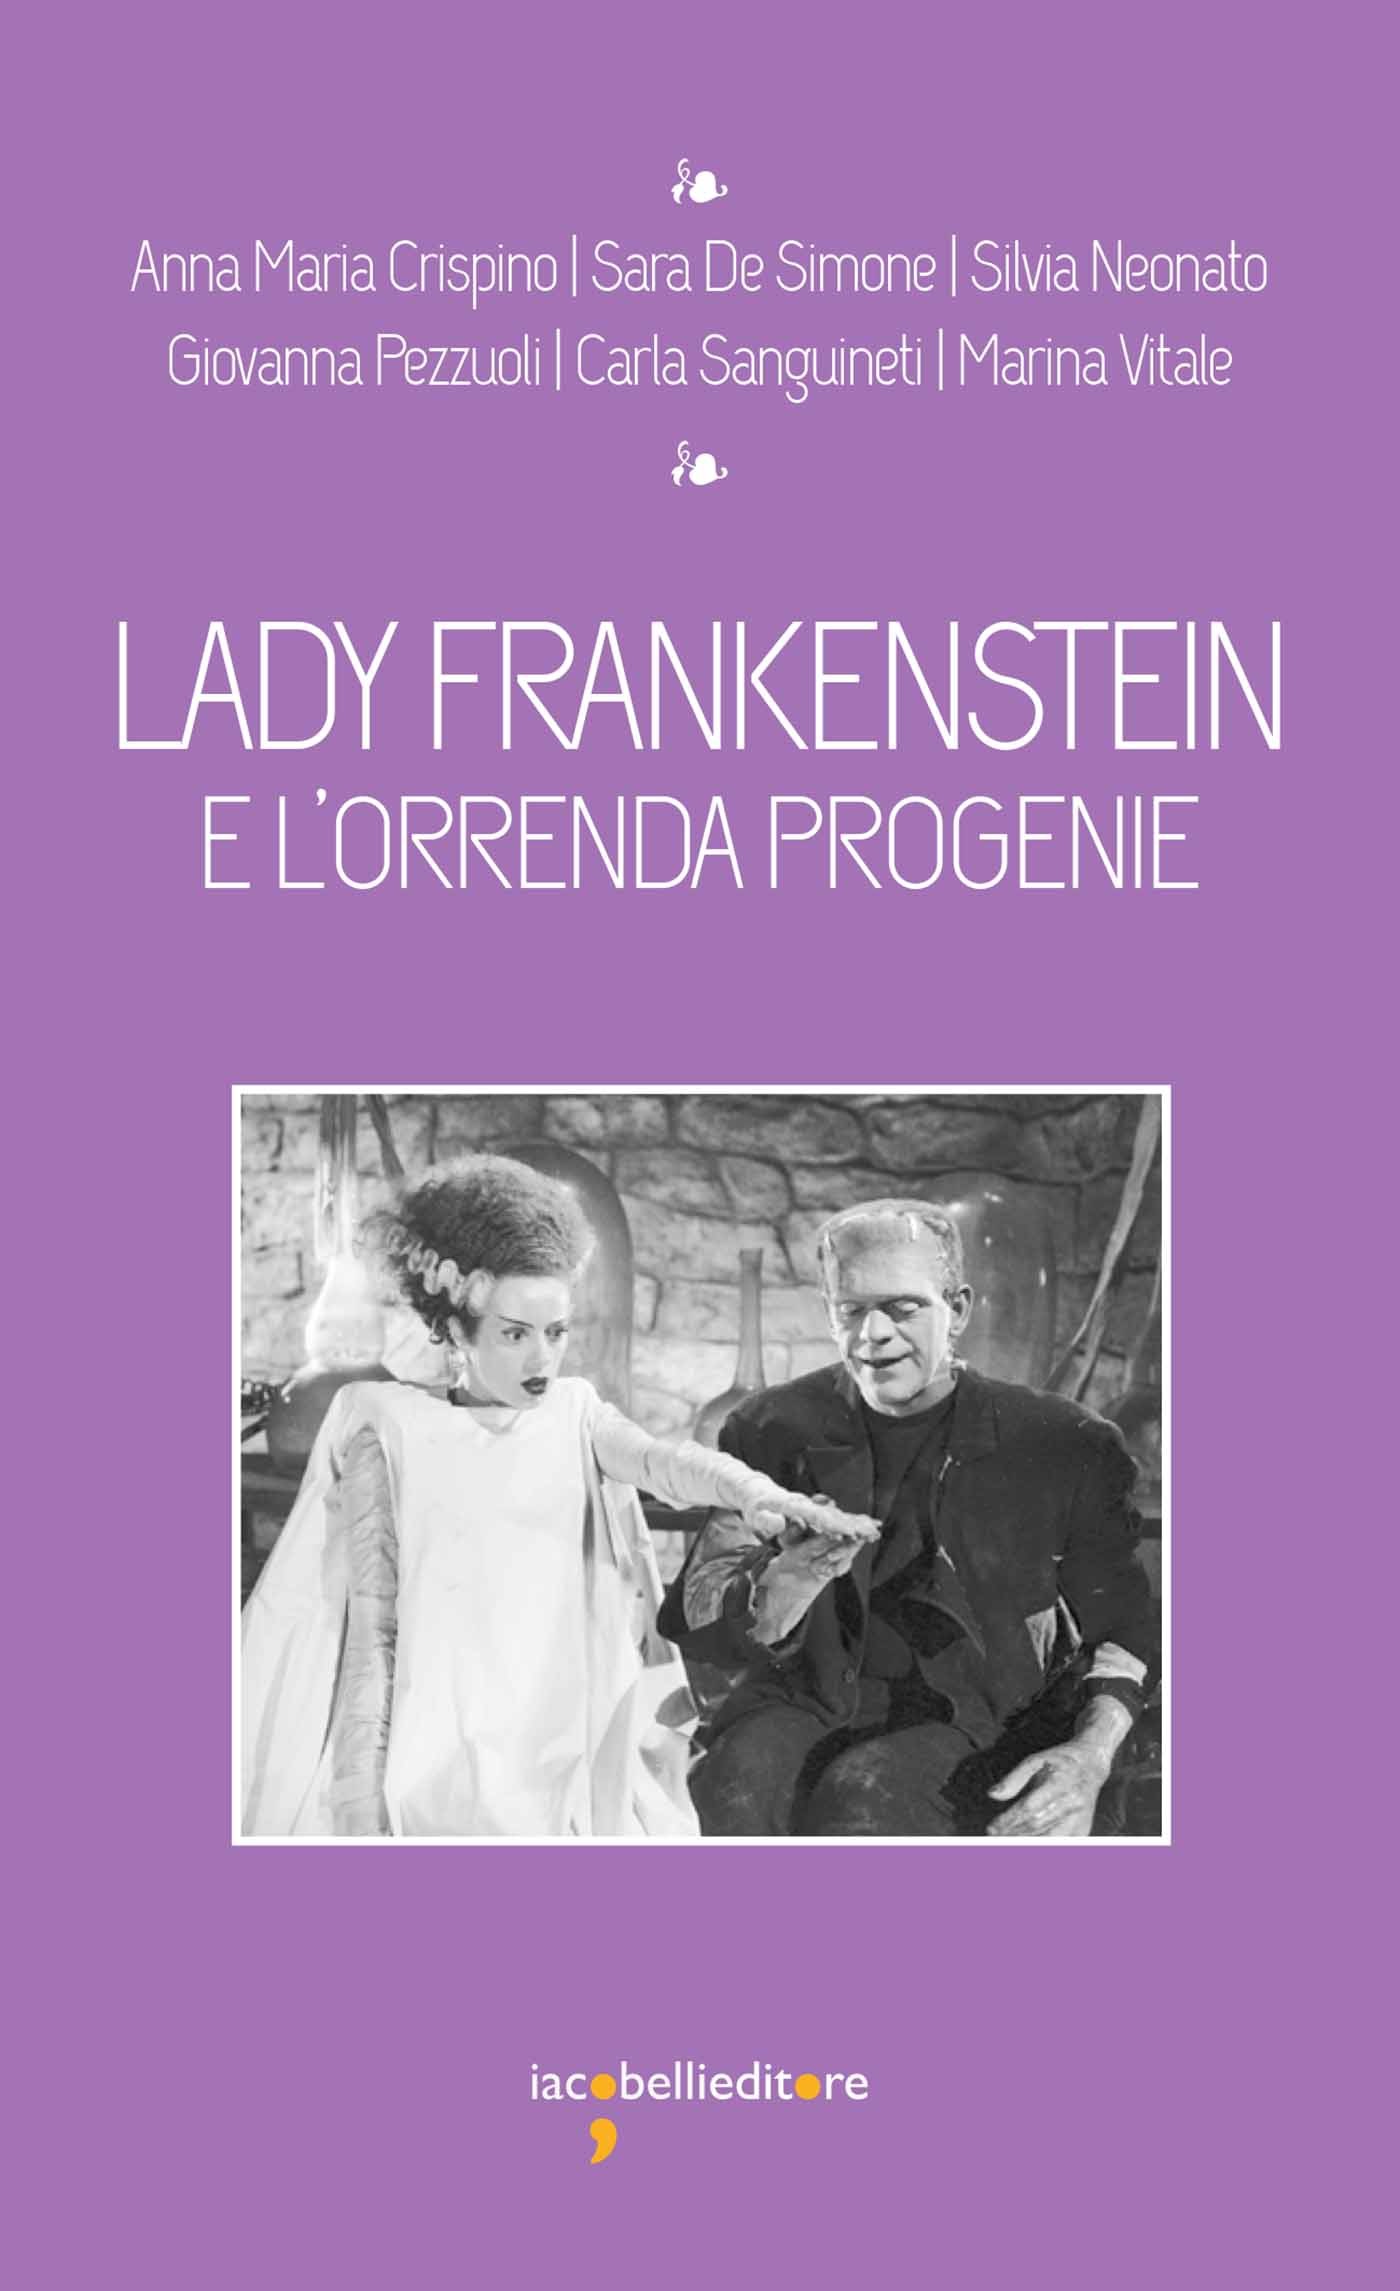 Lady Frankenstein - Librerie.coop